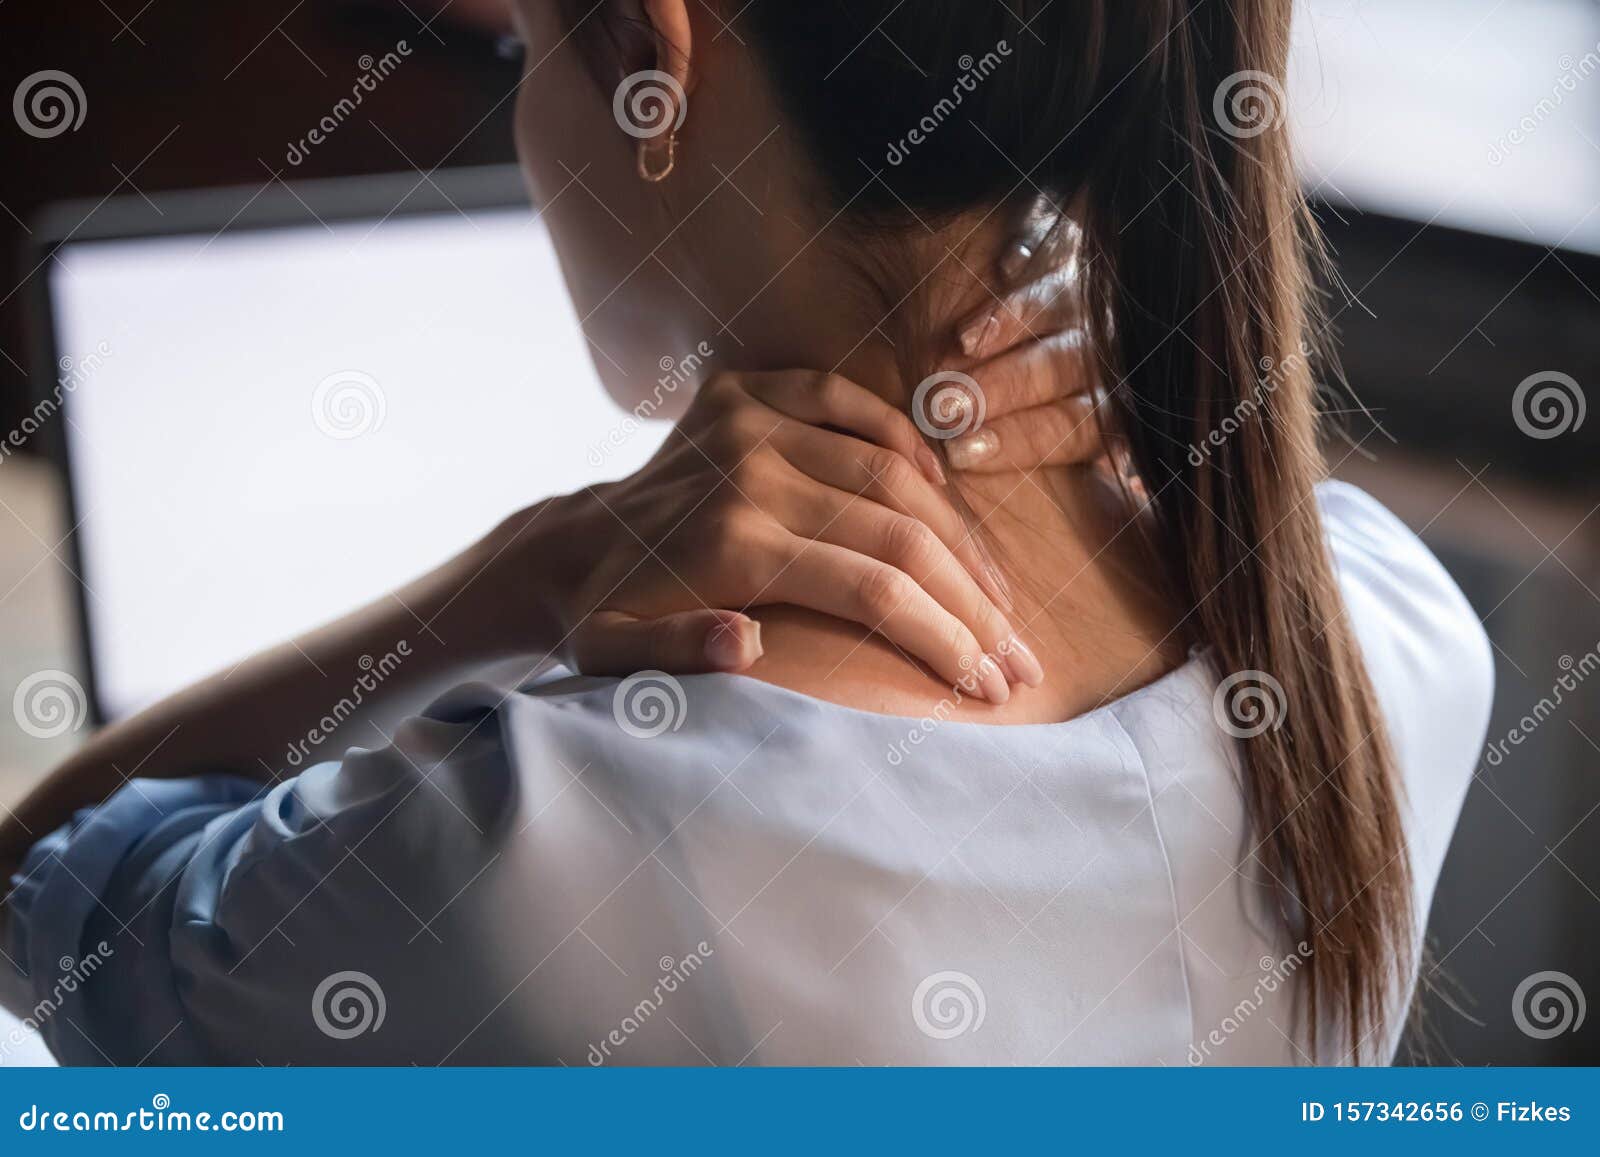 tired woman rubbing stiff sore neck, close up rear view